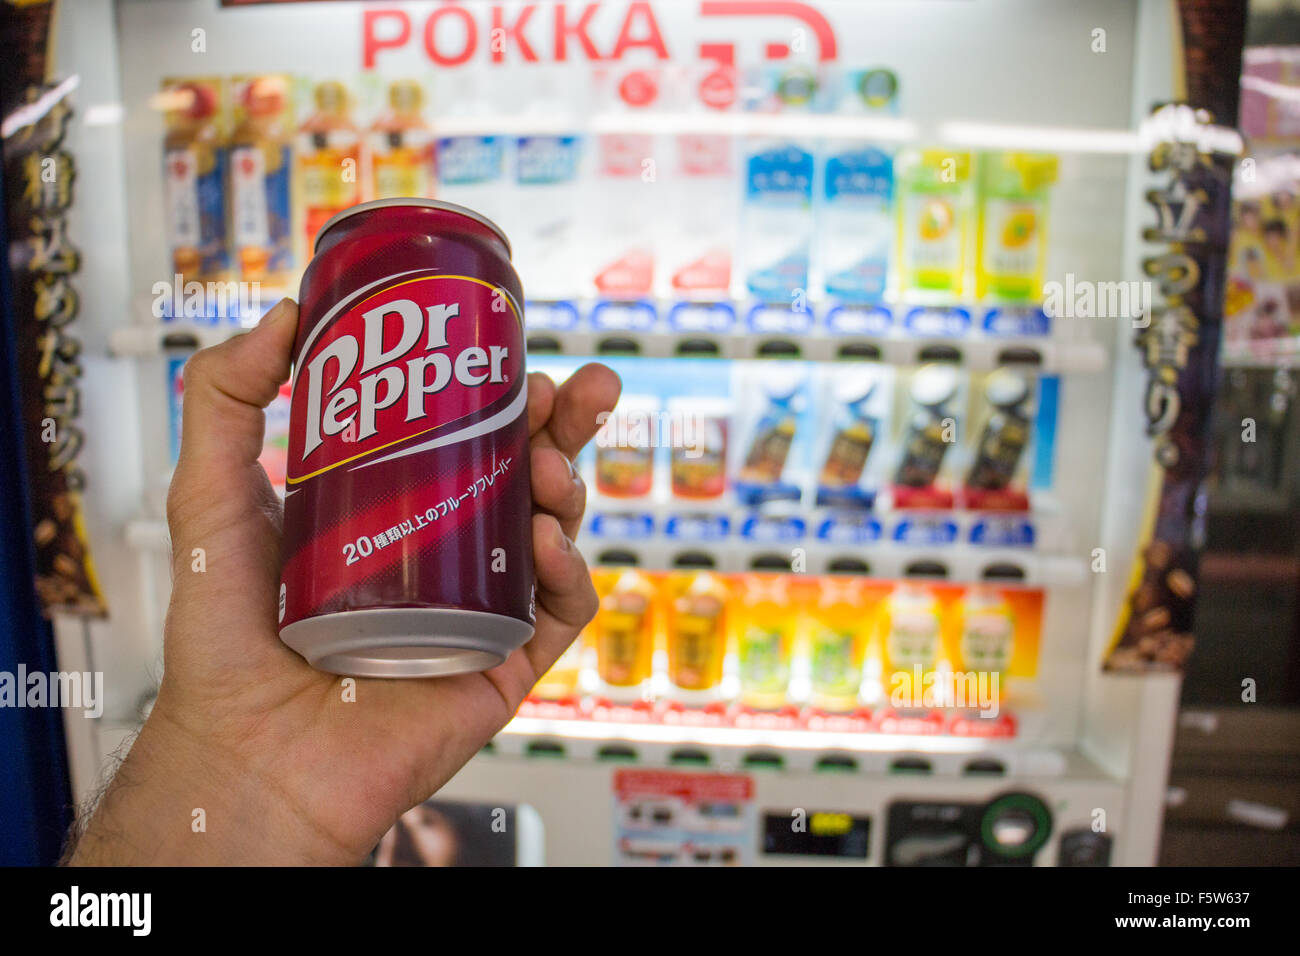 Dr Pepper soda at Japanese vending machine Stock Photo